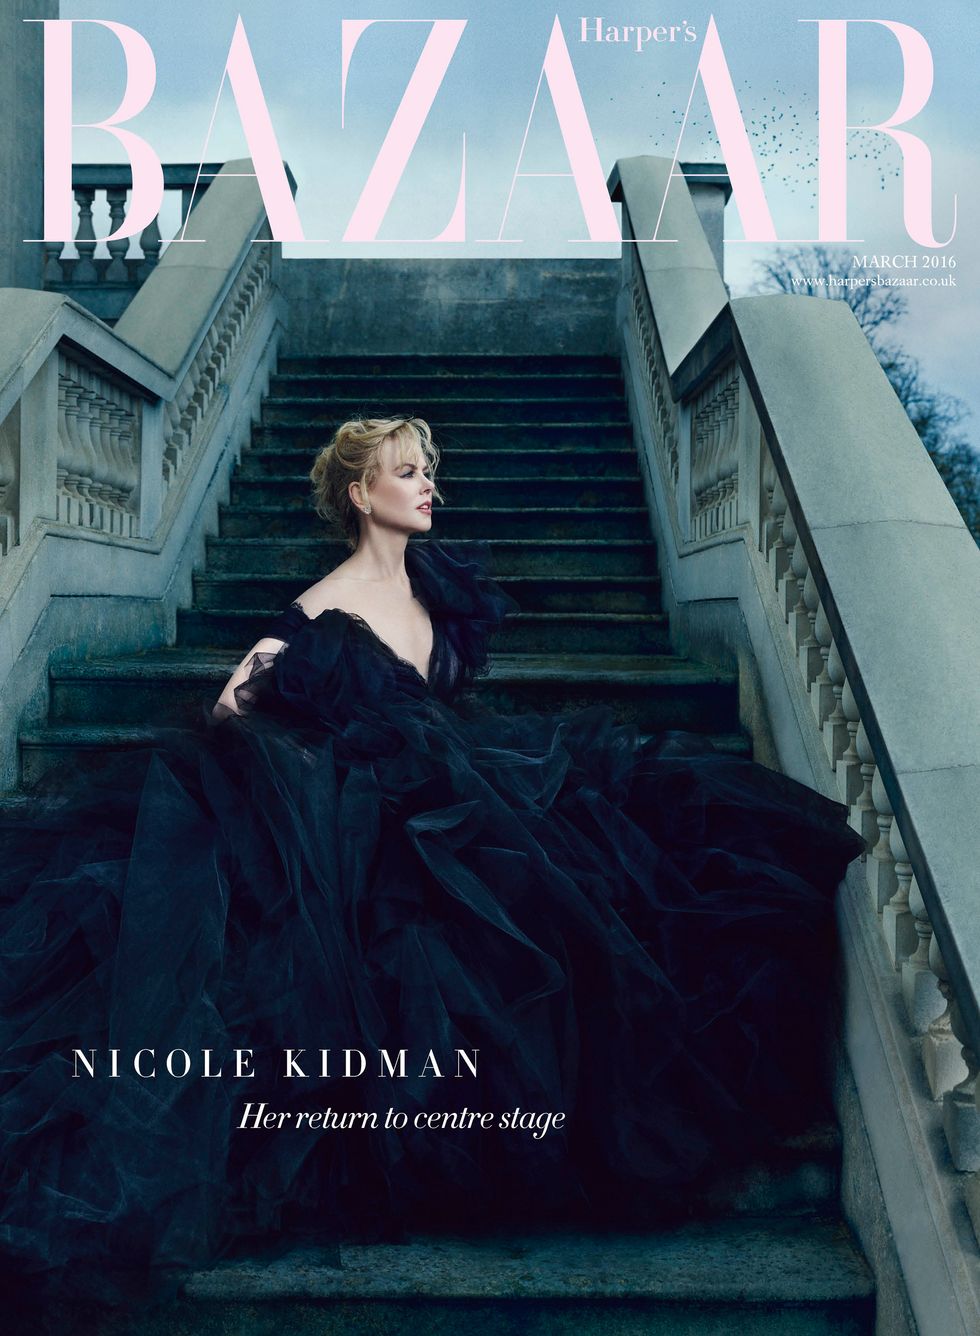 Nicole Kidman for Harper's Bazaar March 2016 issue